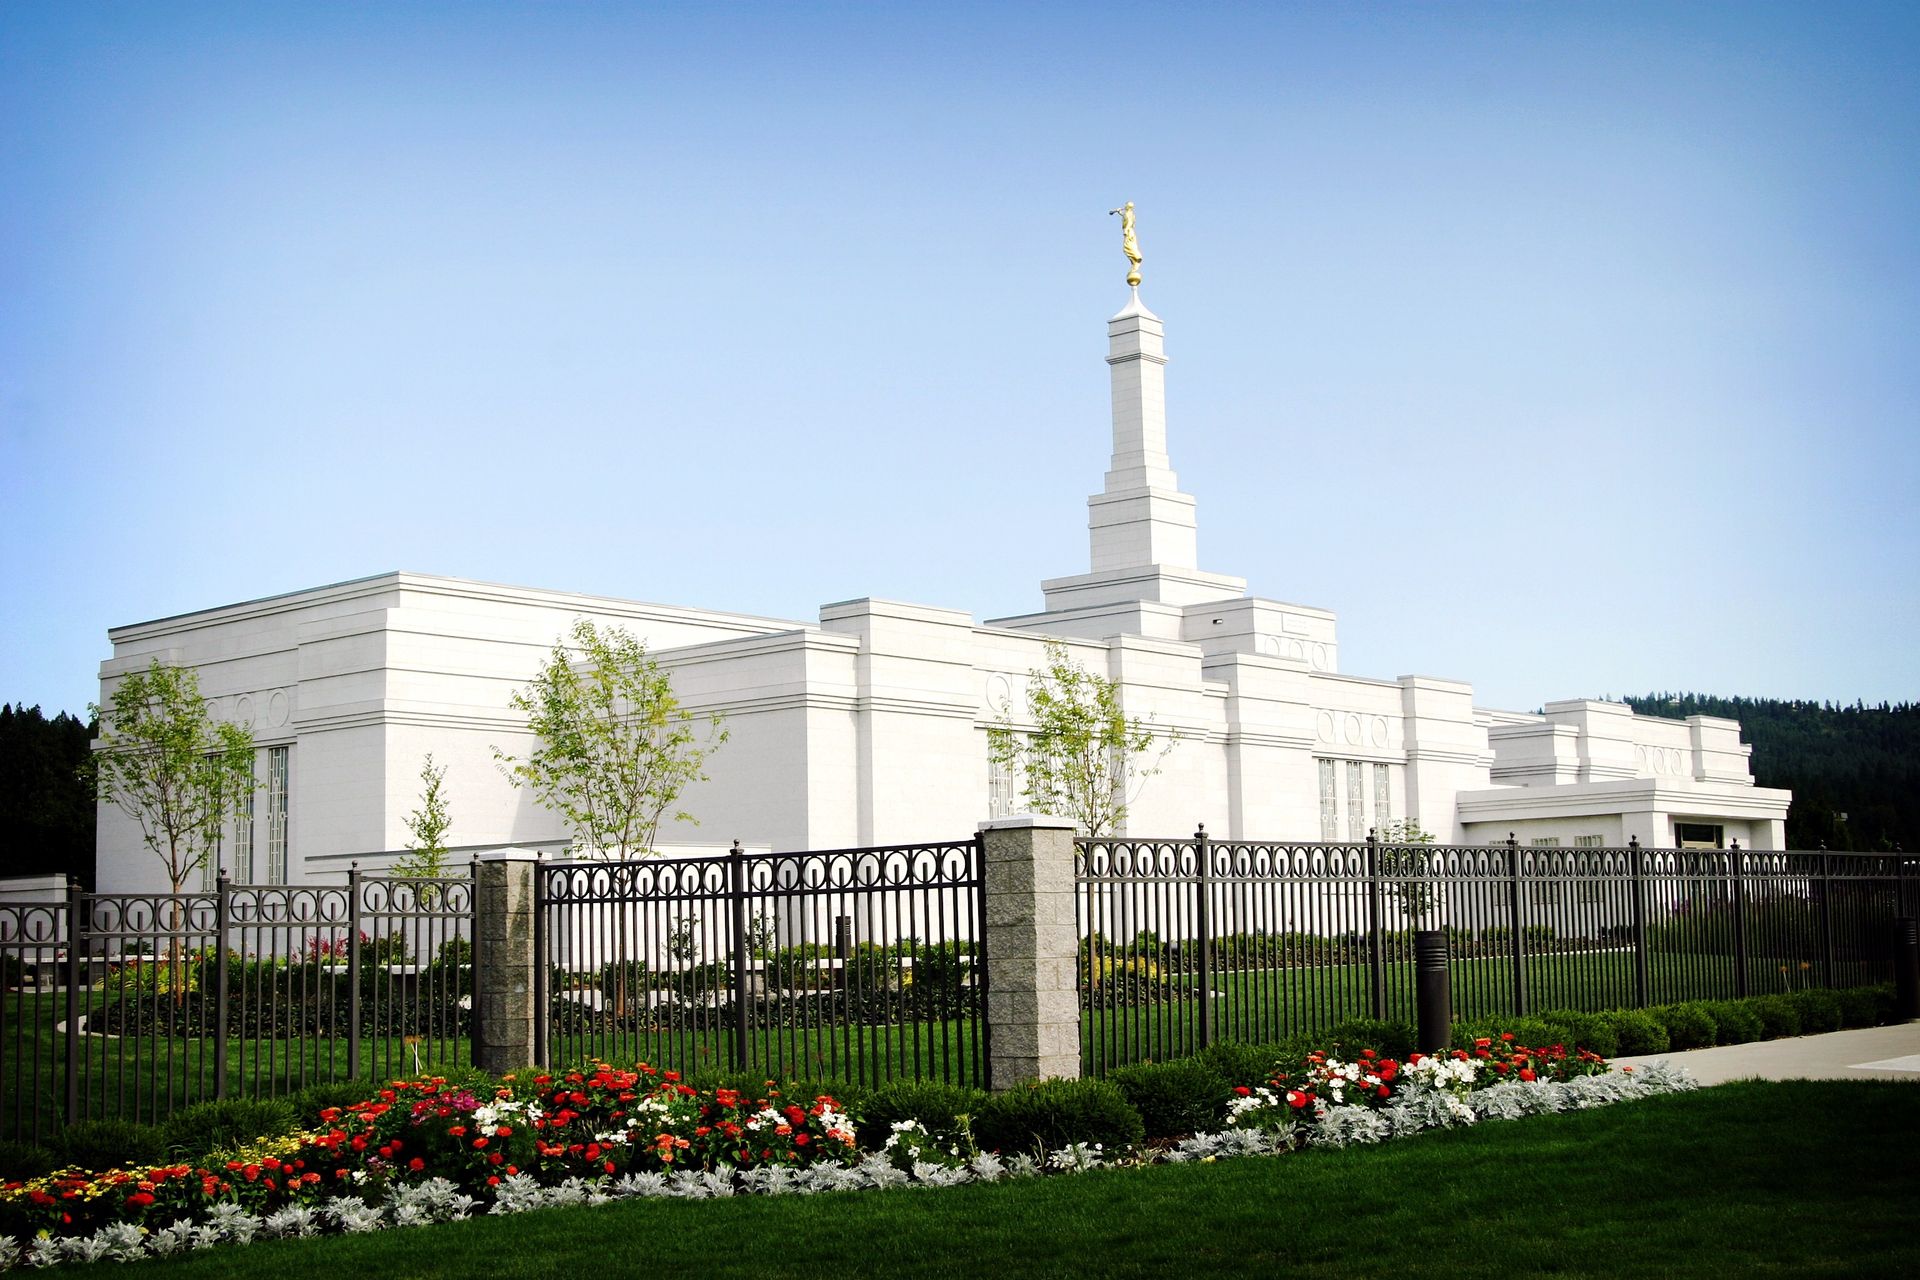 The Spokane Washington Temple, including the entrance and scenery.